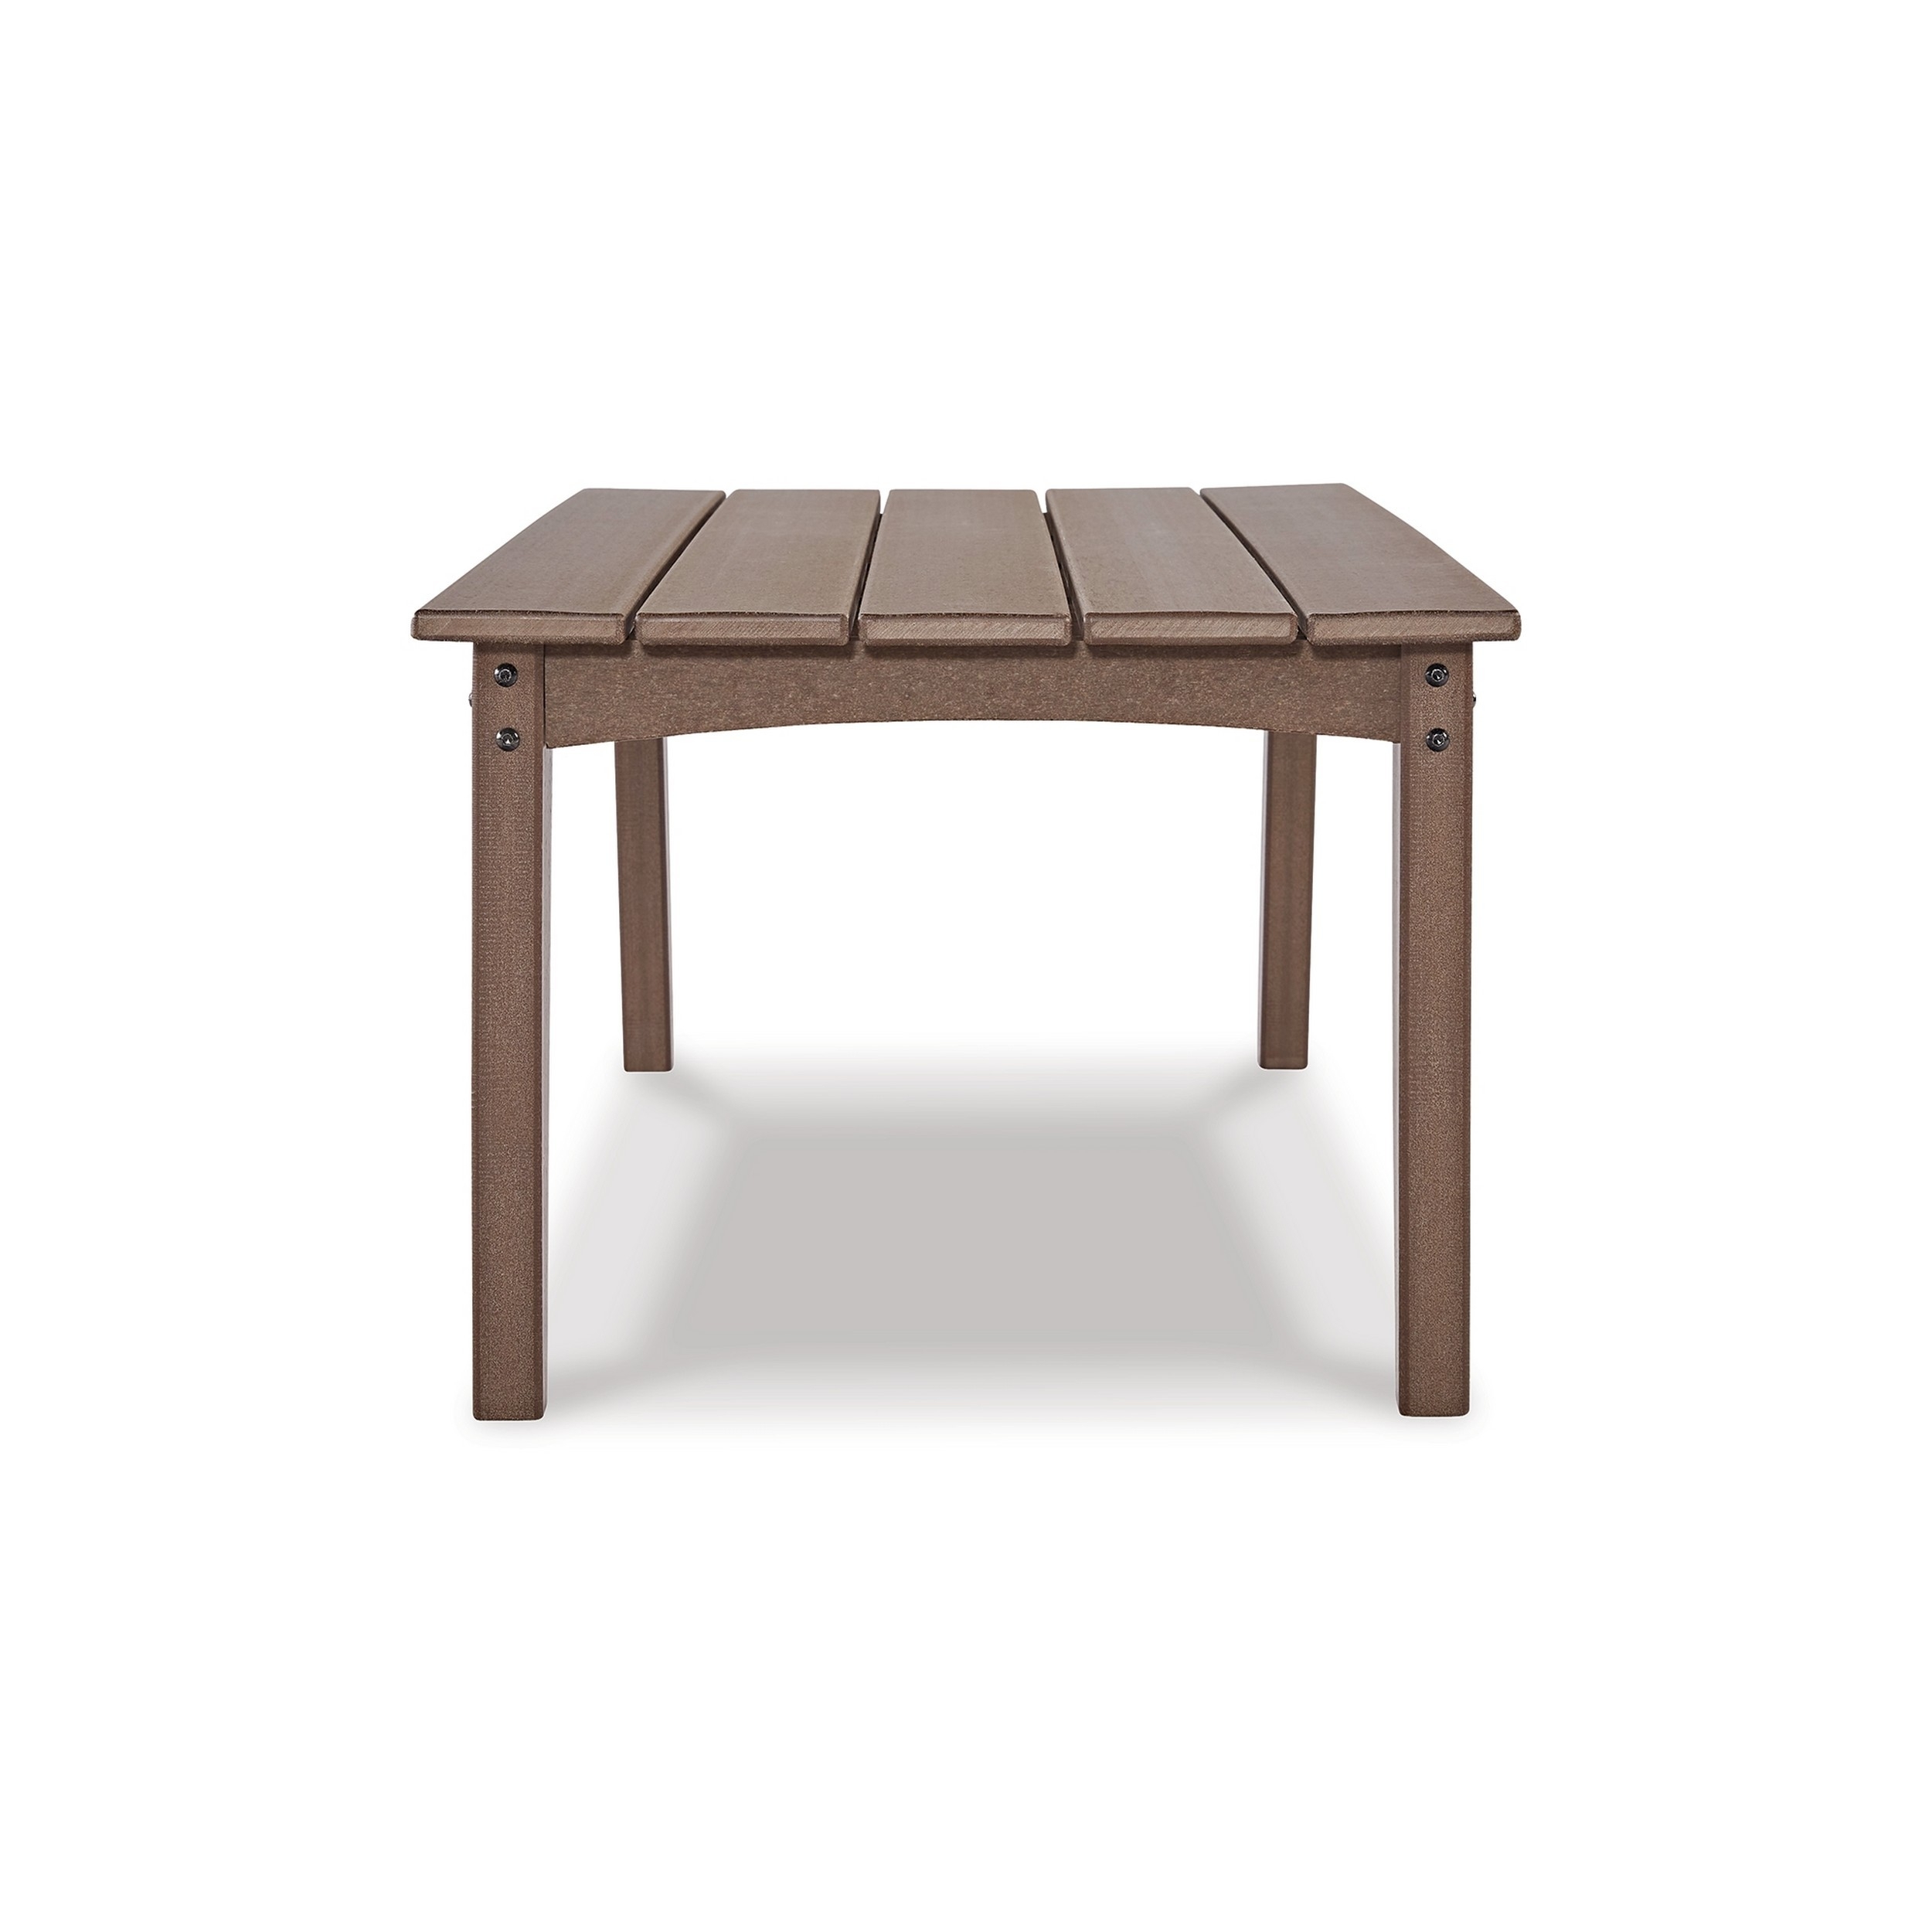 Emme 48 Inch Outdoor Coffee Table, Rectangular Slatted Top, Brown Frame - Saltoro Sherpi